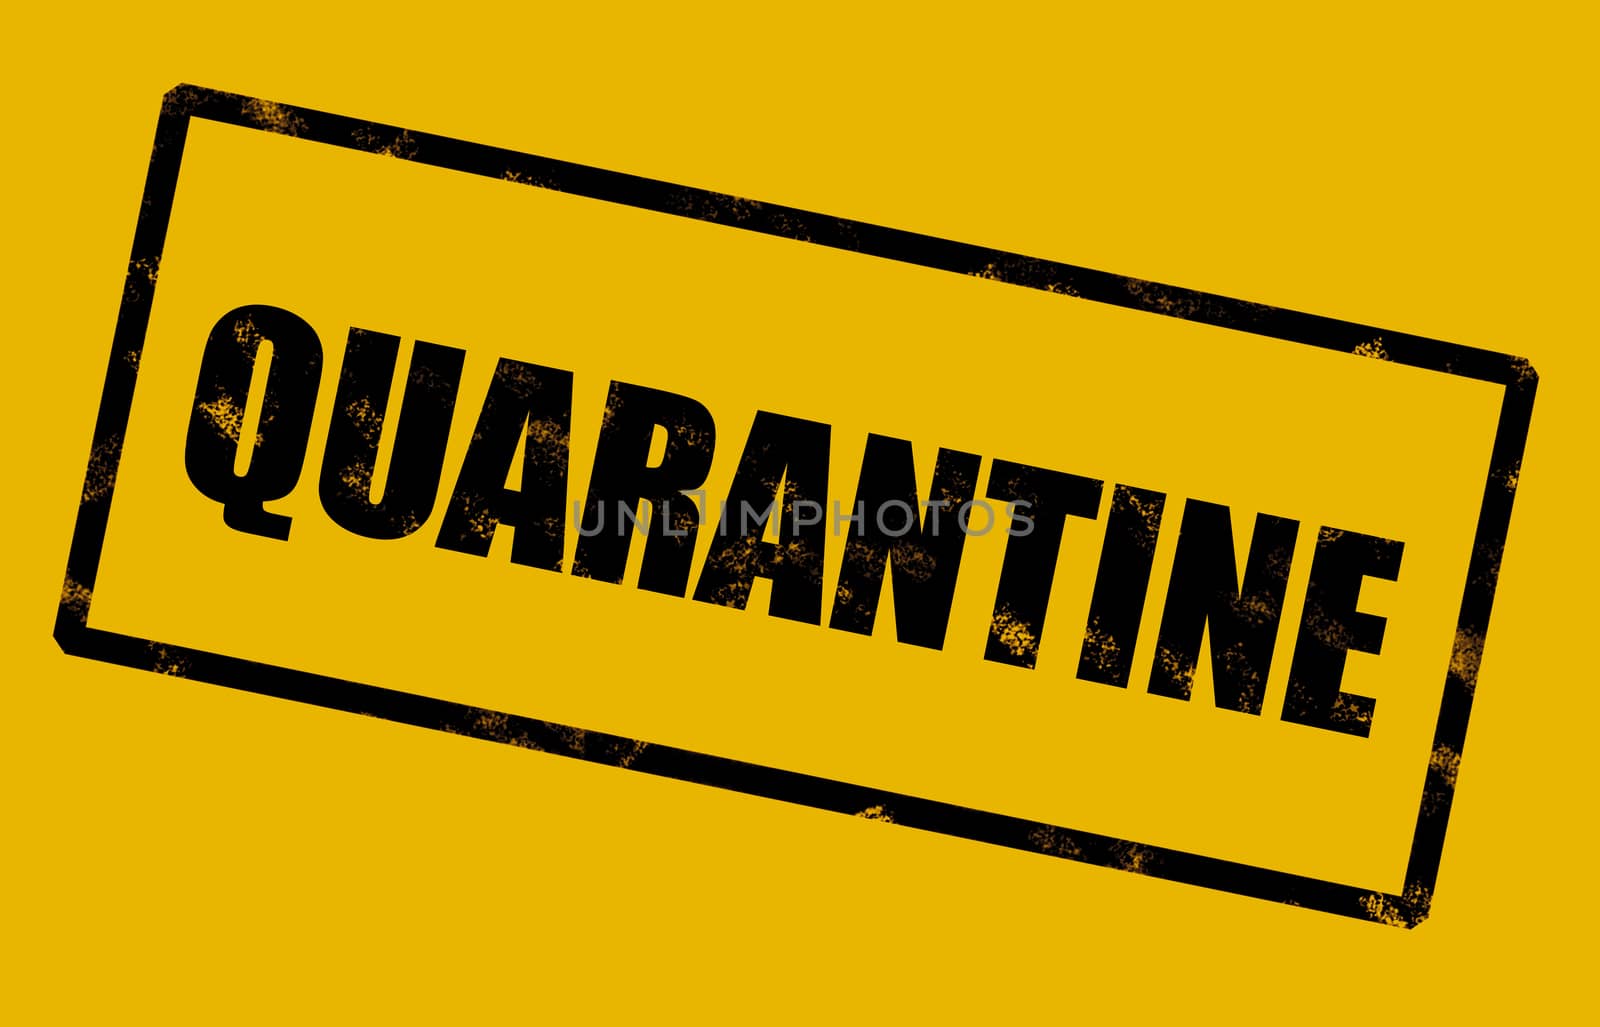 Quarantine warning sign text on yellow background for COVID-19 Coronavirus isolation caution sign.